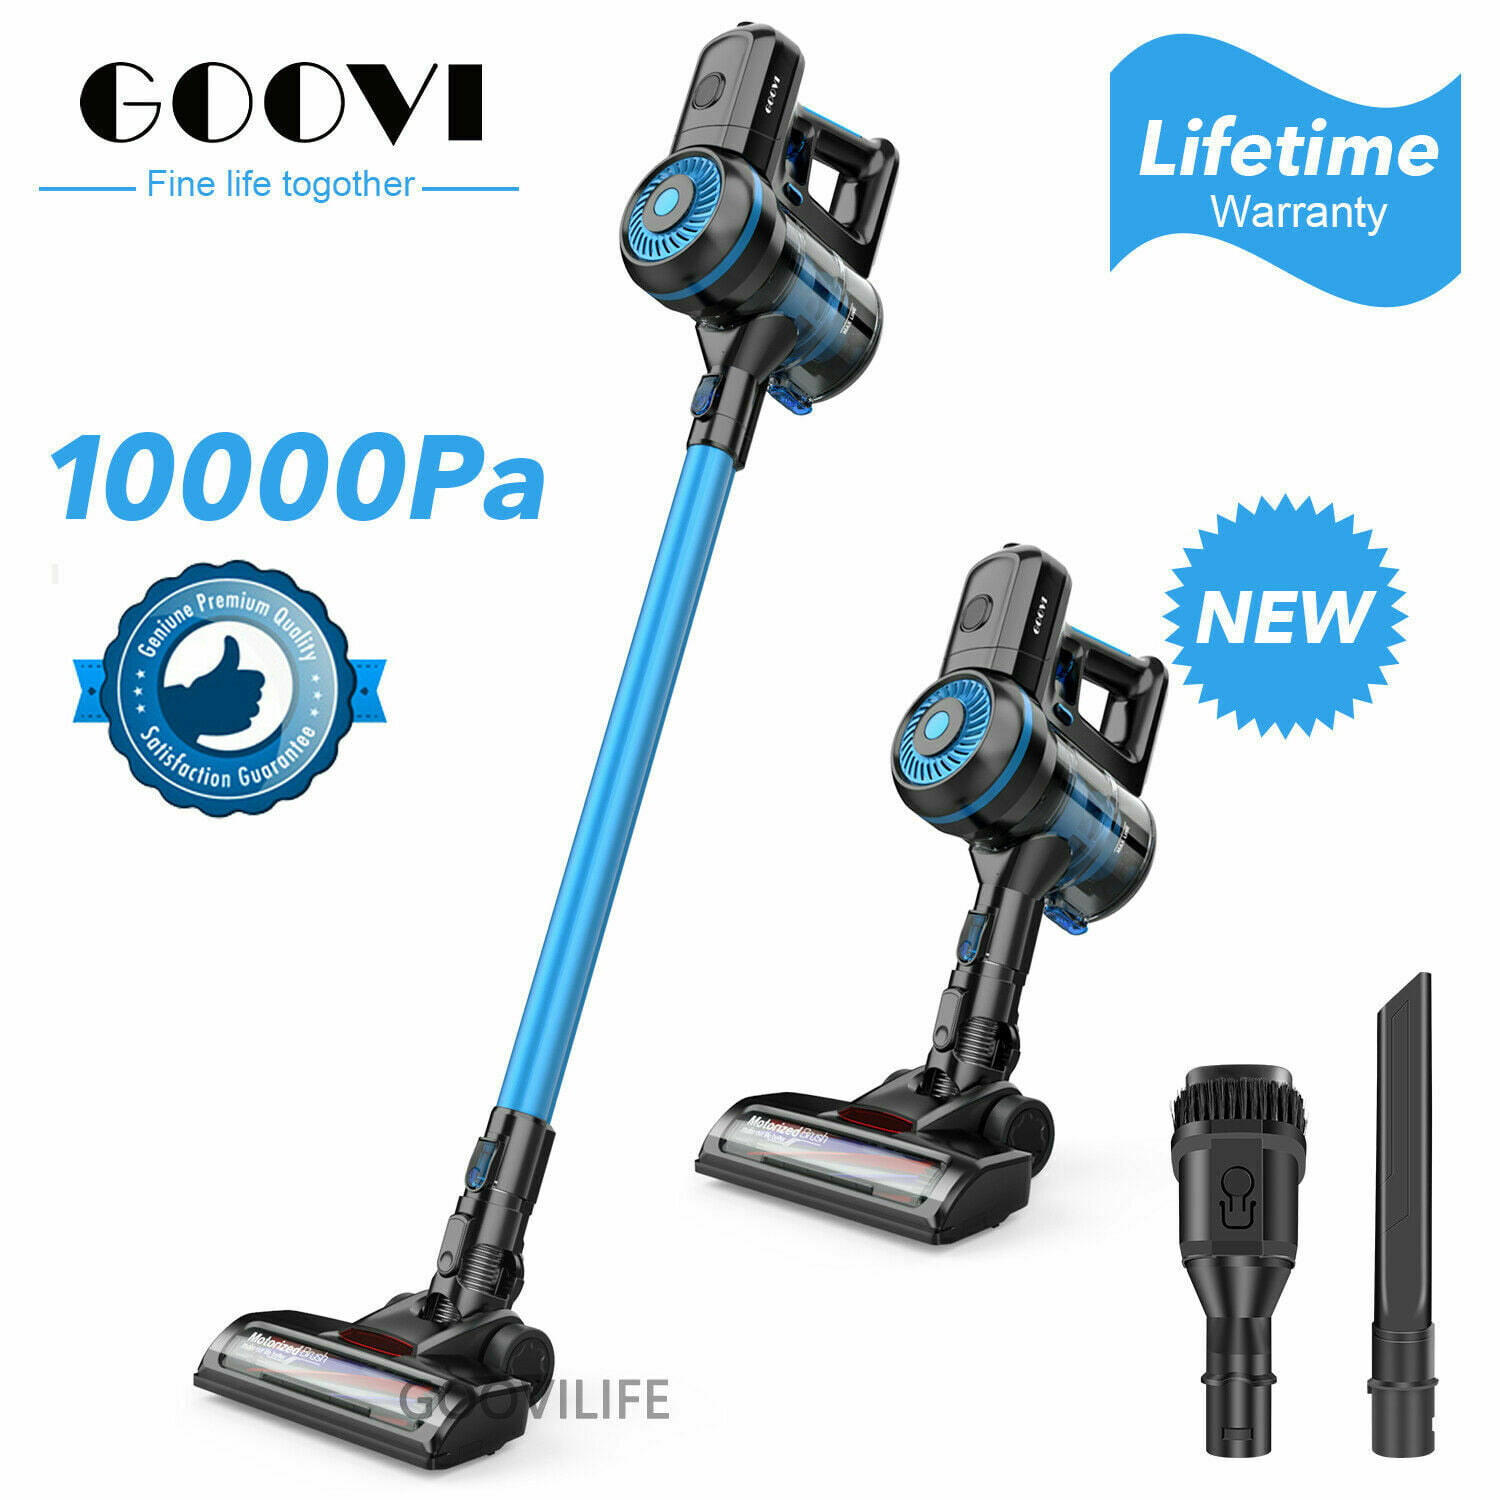 ONSON 16000Pa Cordless Handheld Stick Vacuum Cleaner Upright 2 IN 1 LED Brush US 